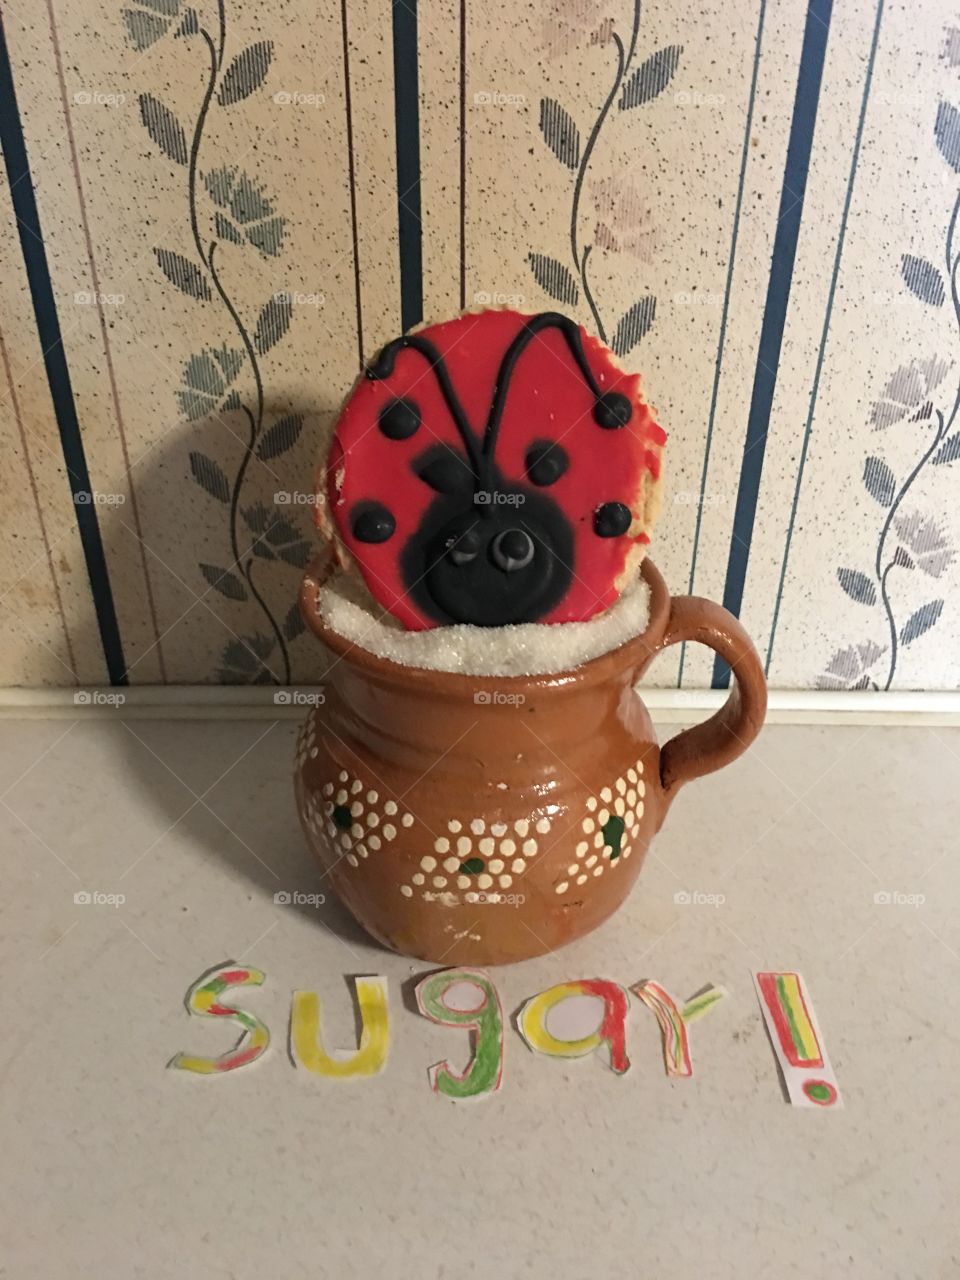 A ladybug eating sugar 